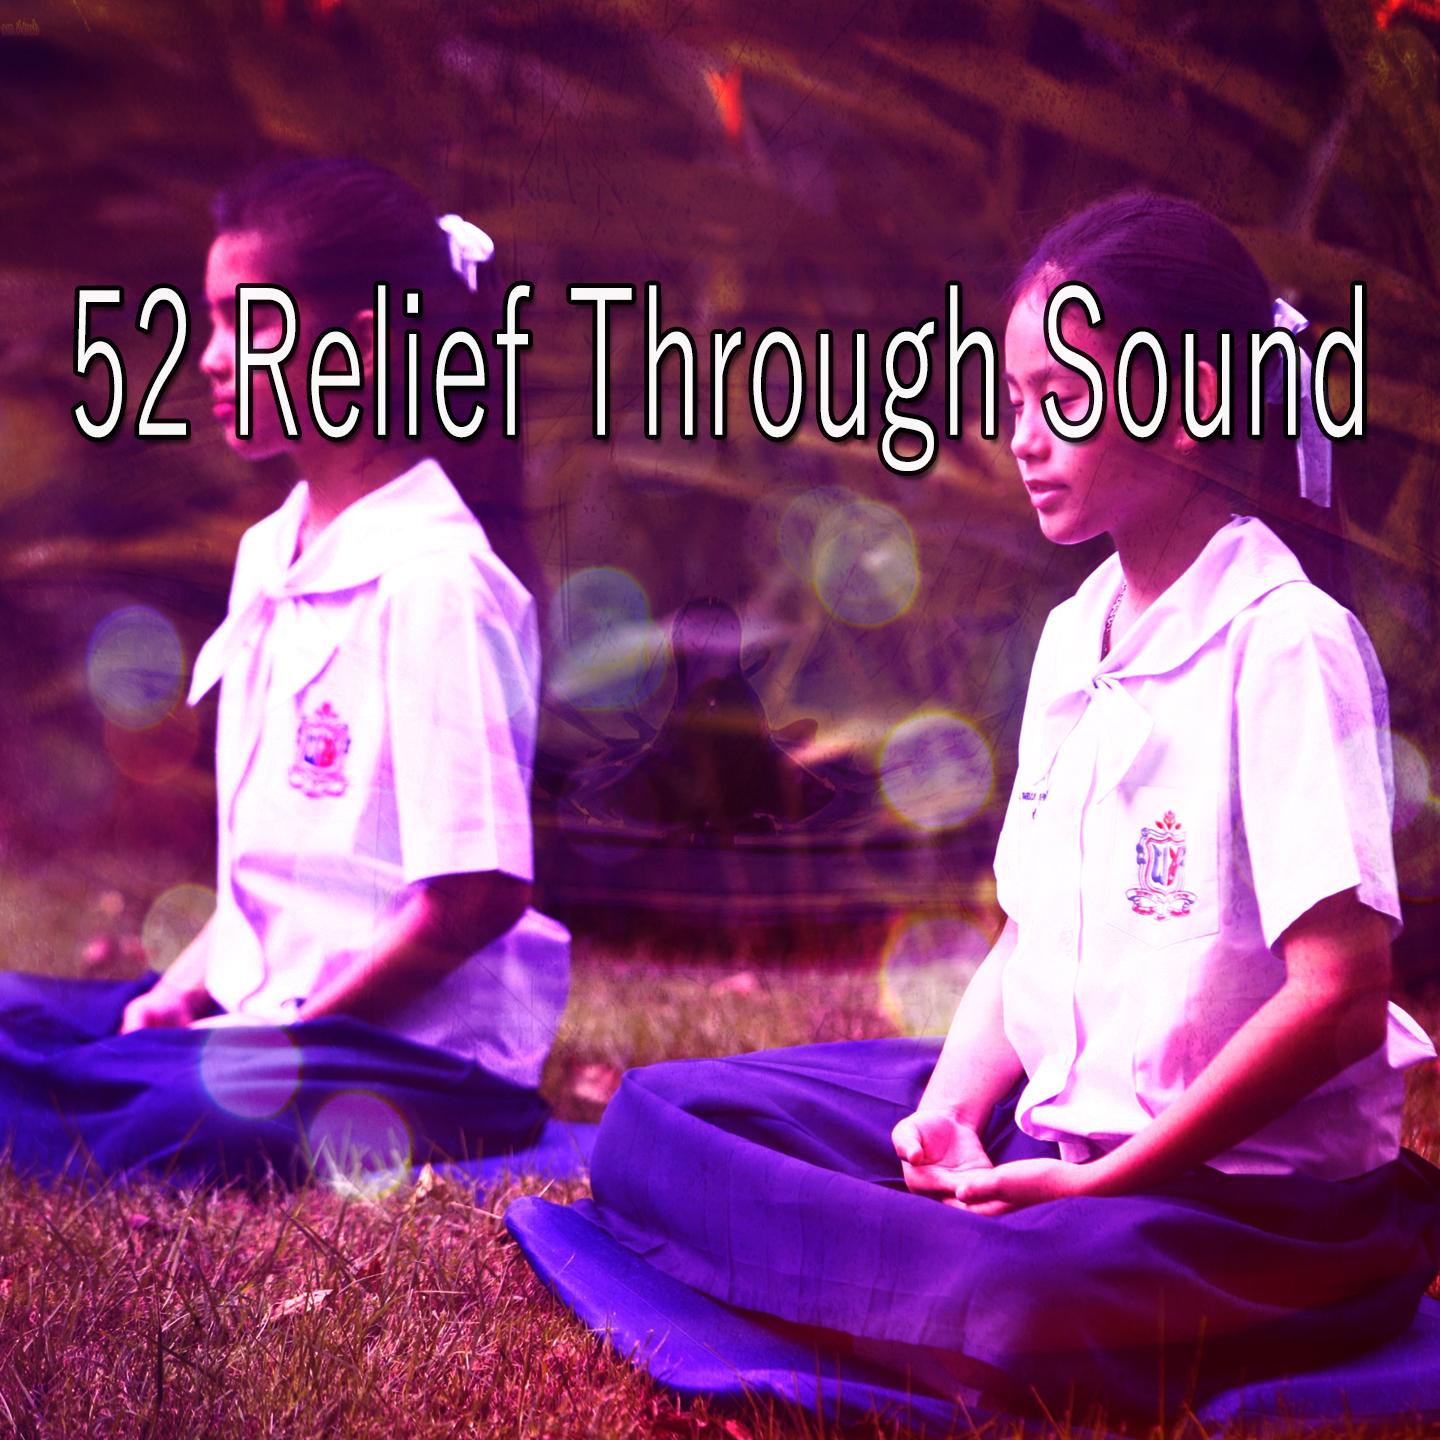 52 Relief Through Sound